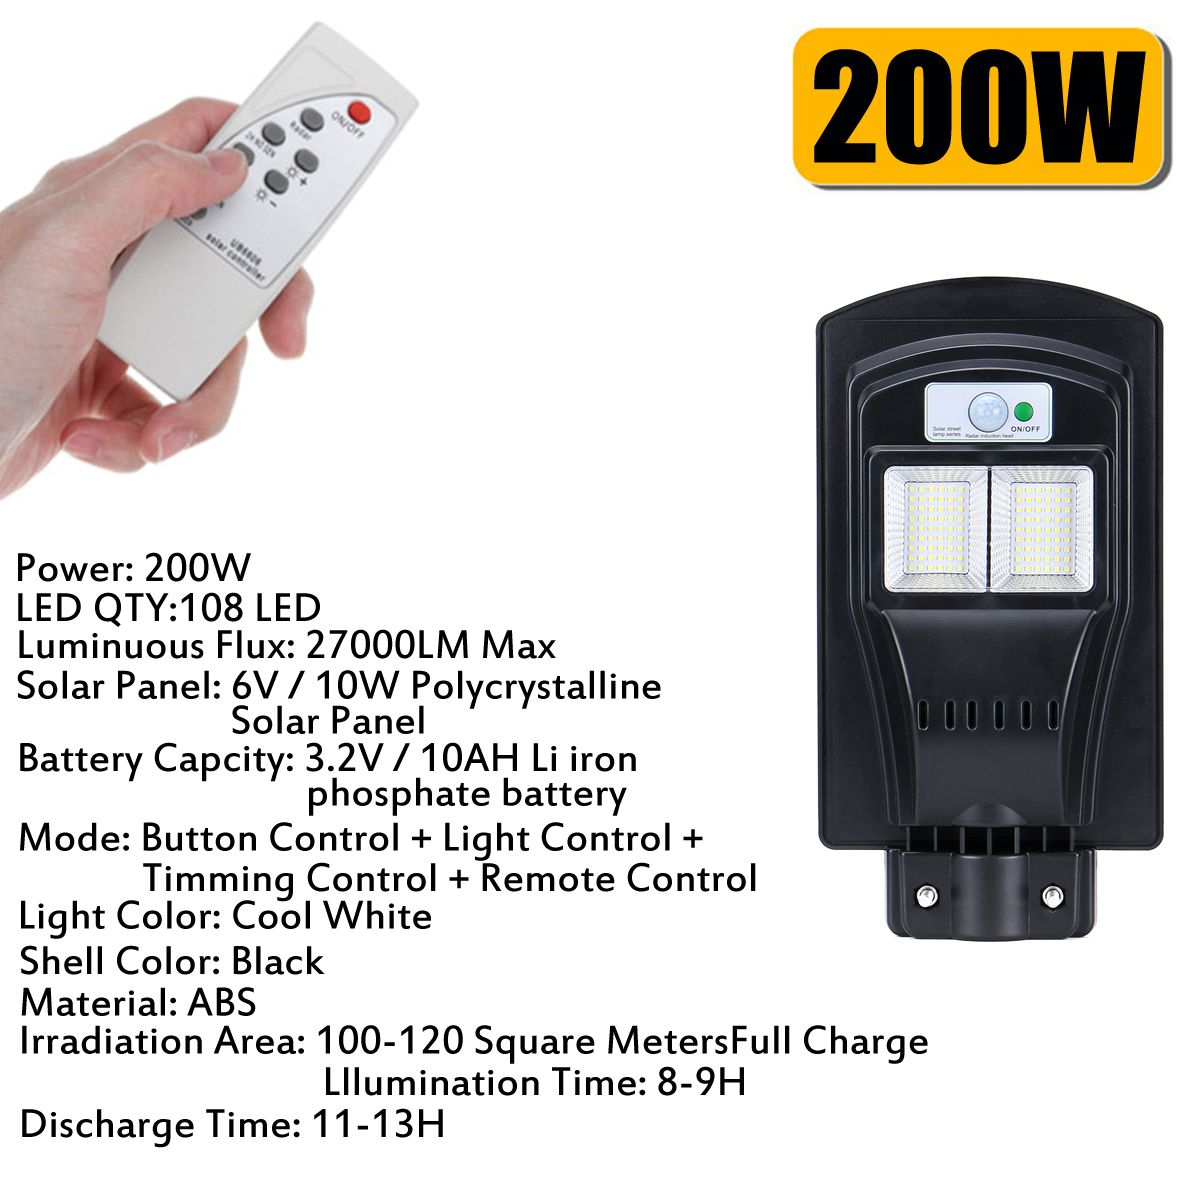 200W-400W-750W-LED-Solar-Street-Light-Motion-Sensor-Radar-Induction-Wall-Lamp--Remote-Control-1692359